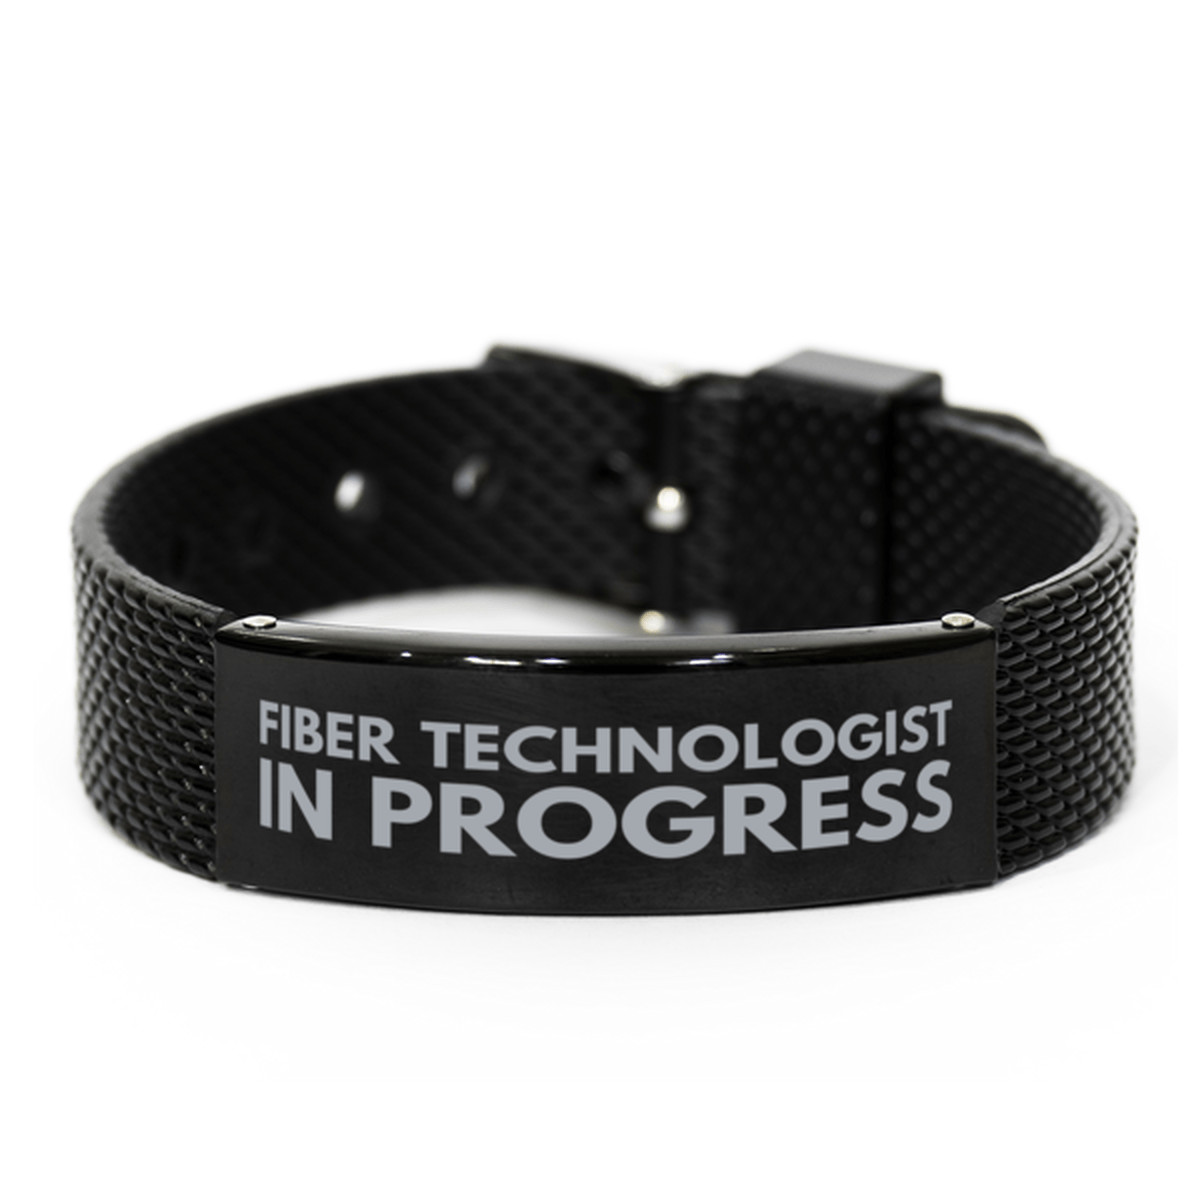 Inspirational Fiber Technologist Black Shark Mesh Bracelet, Fiber Technologist In Progress, Best Graduation Gifts for Students